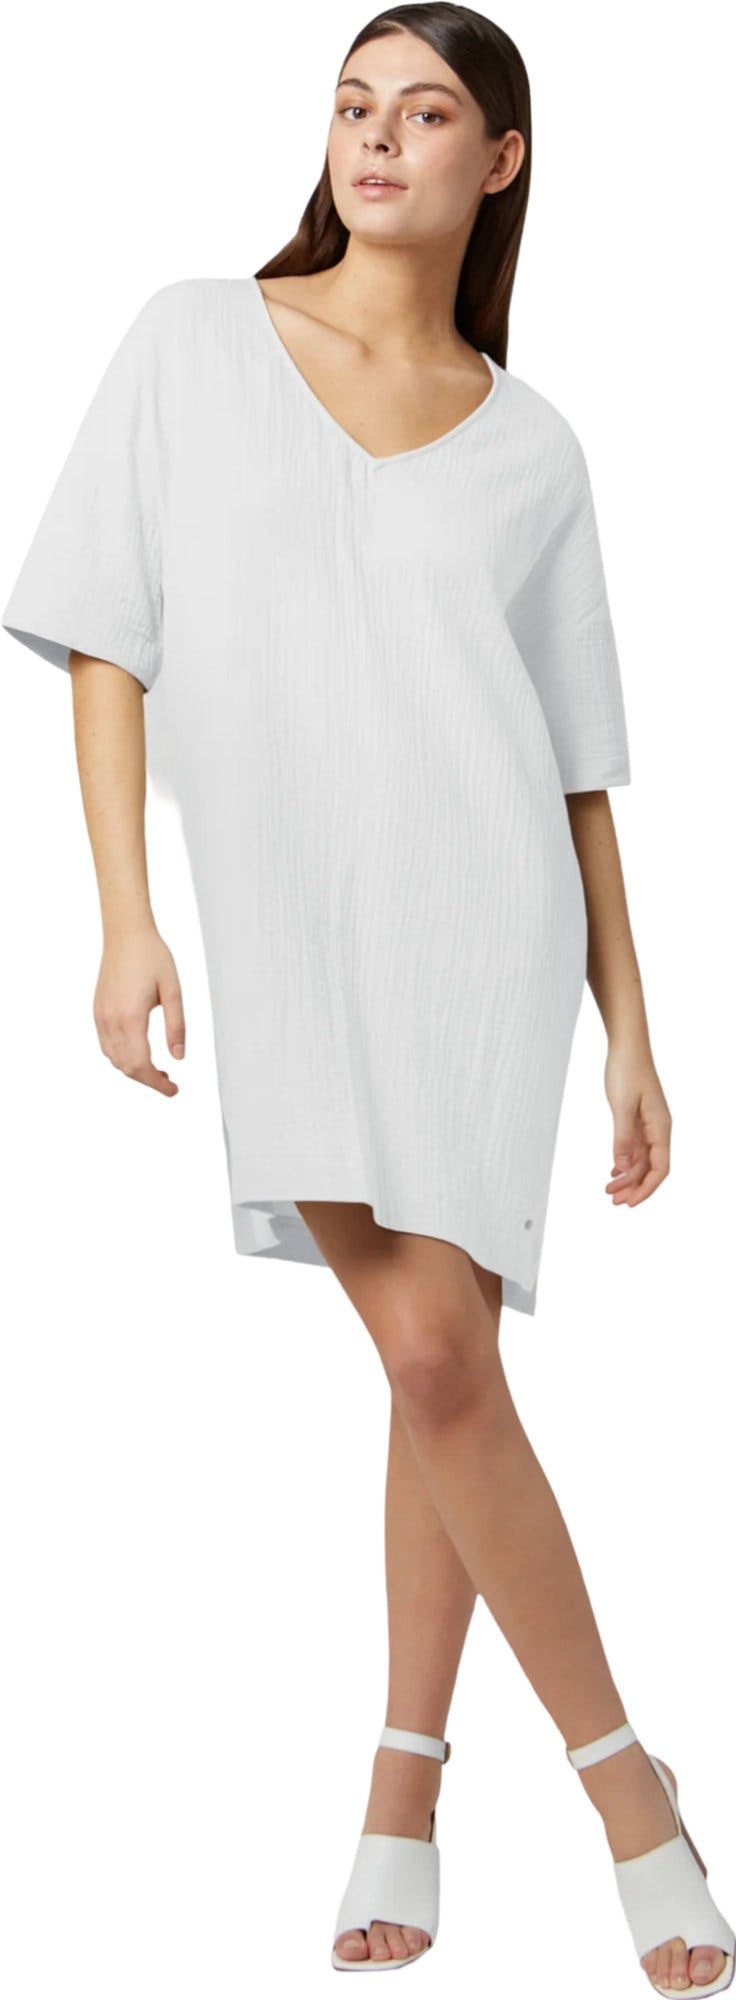 Product image for Caldera Dress - Women's